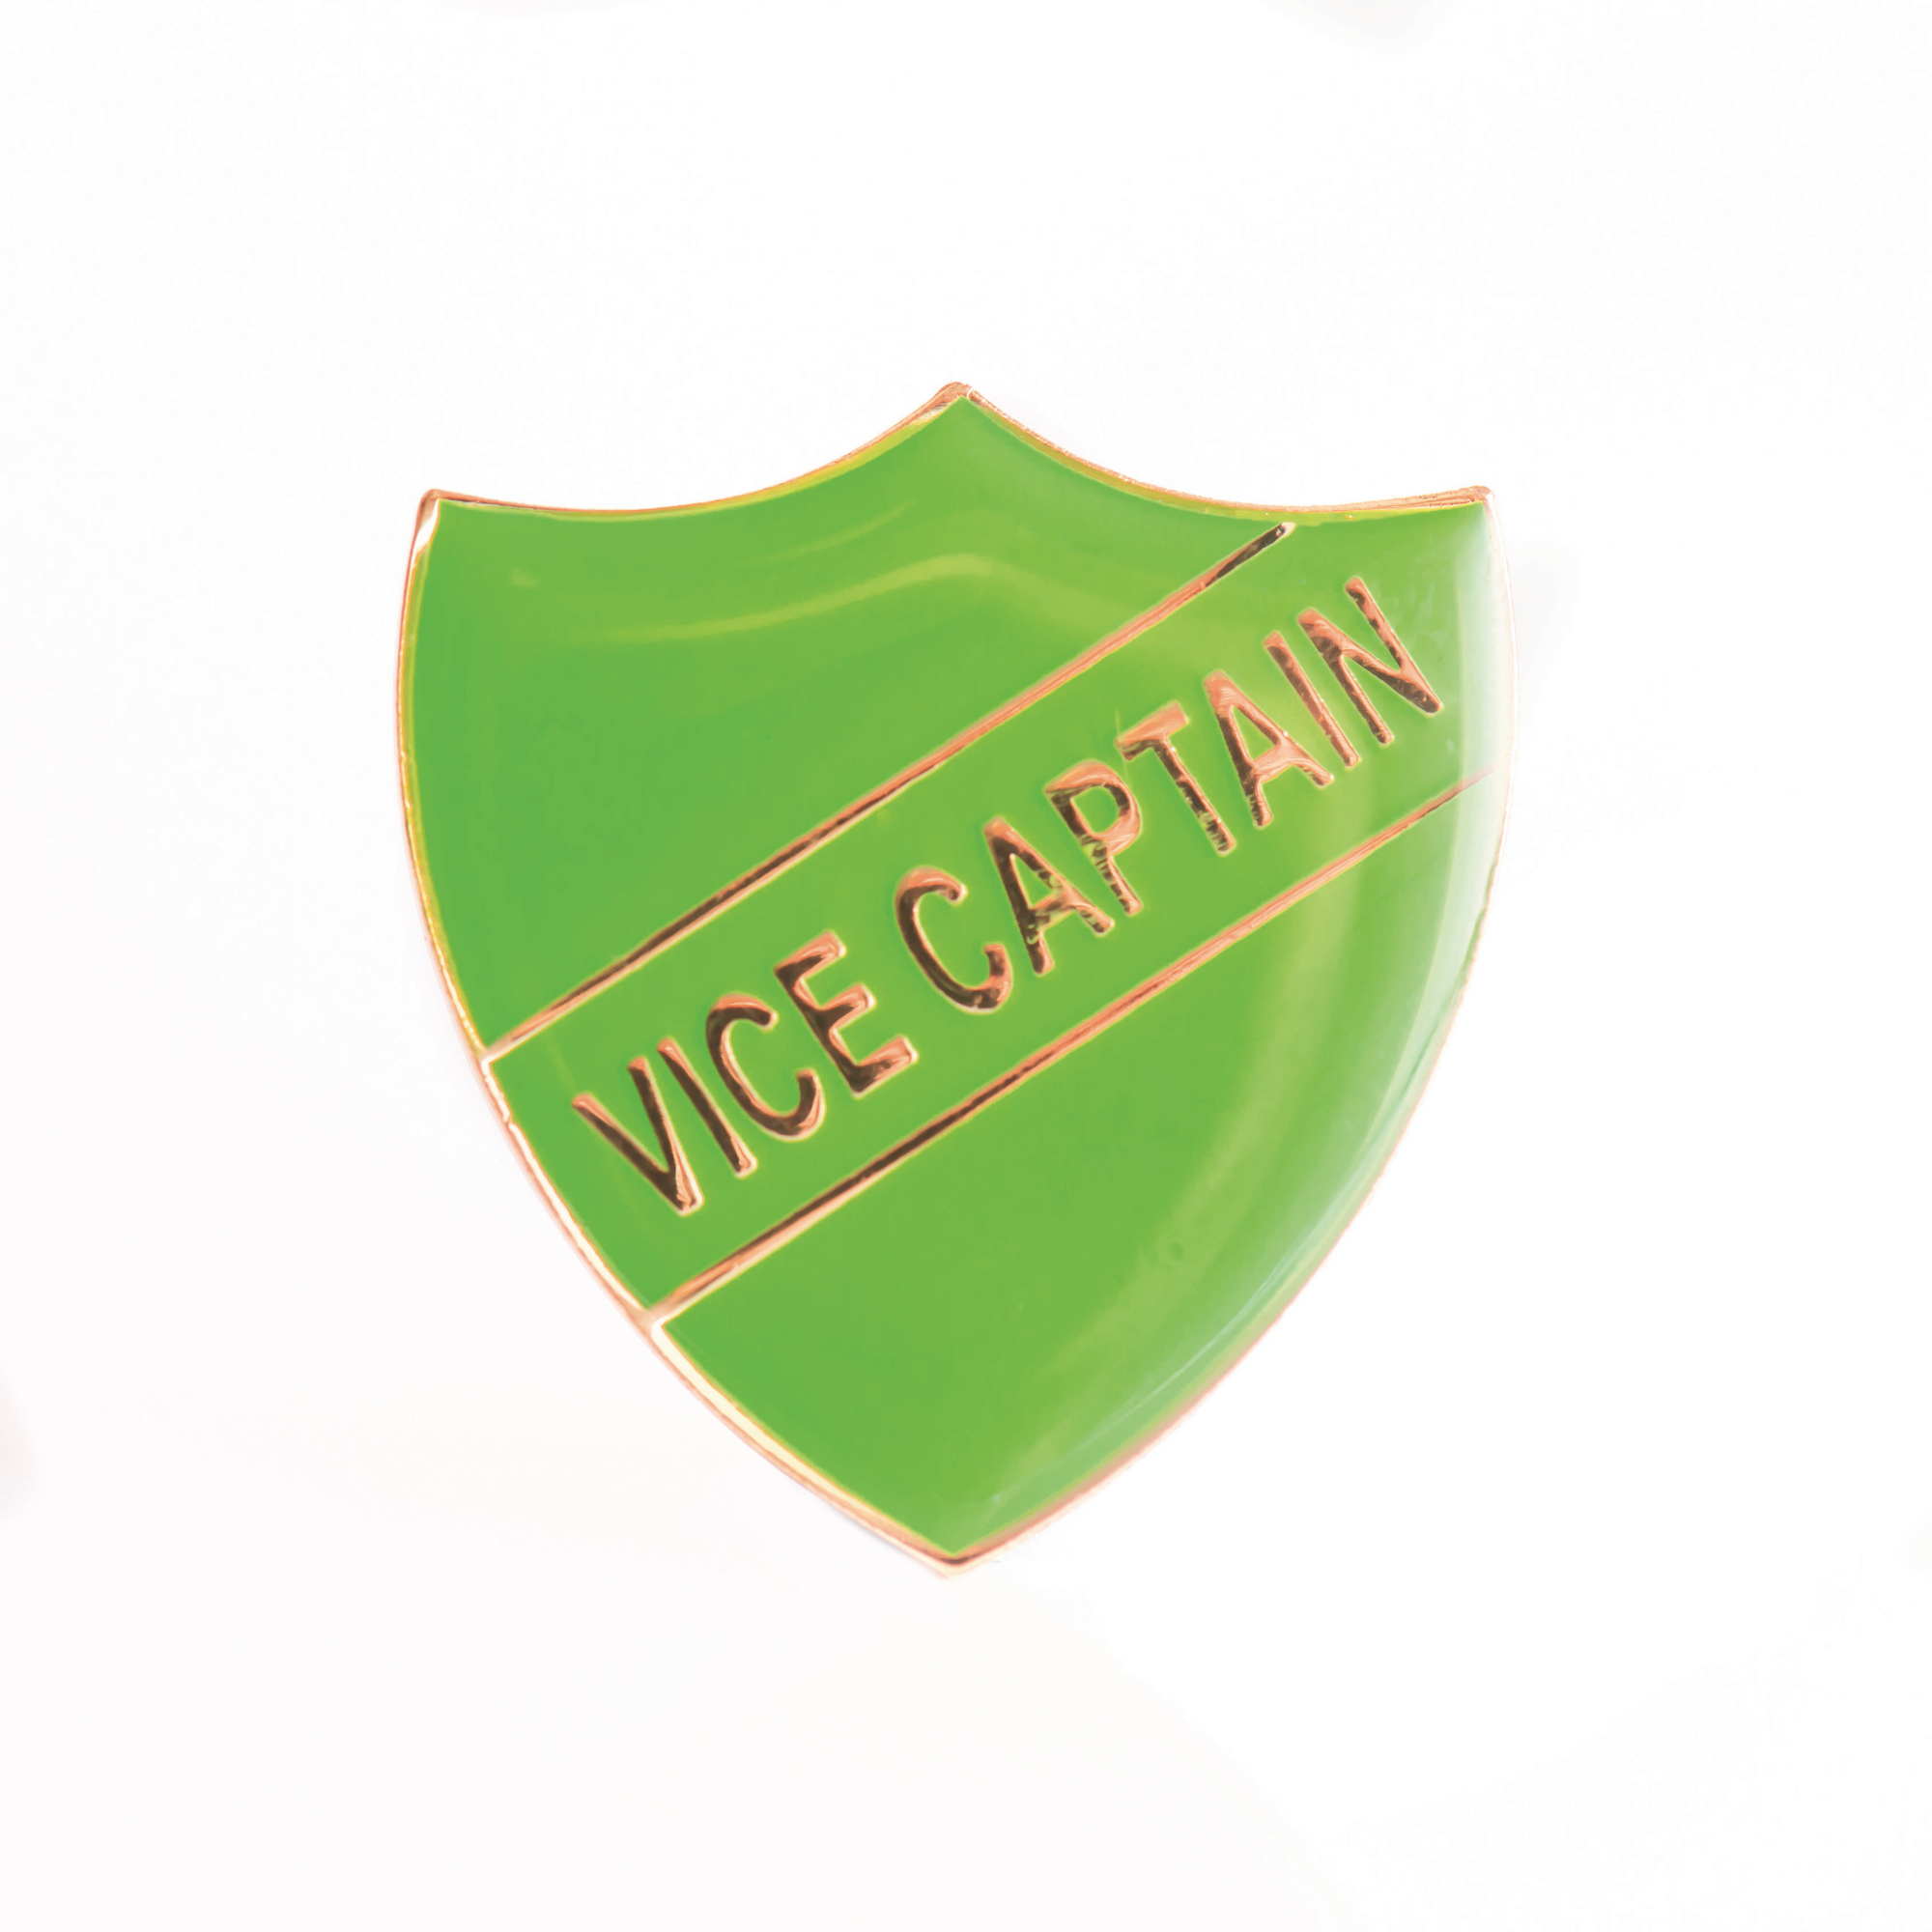 Vice Captain Shield- Green